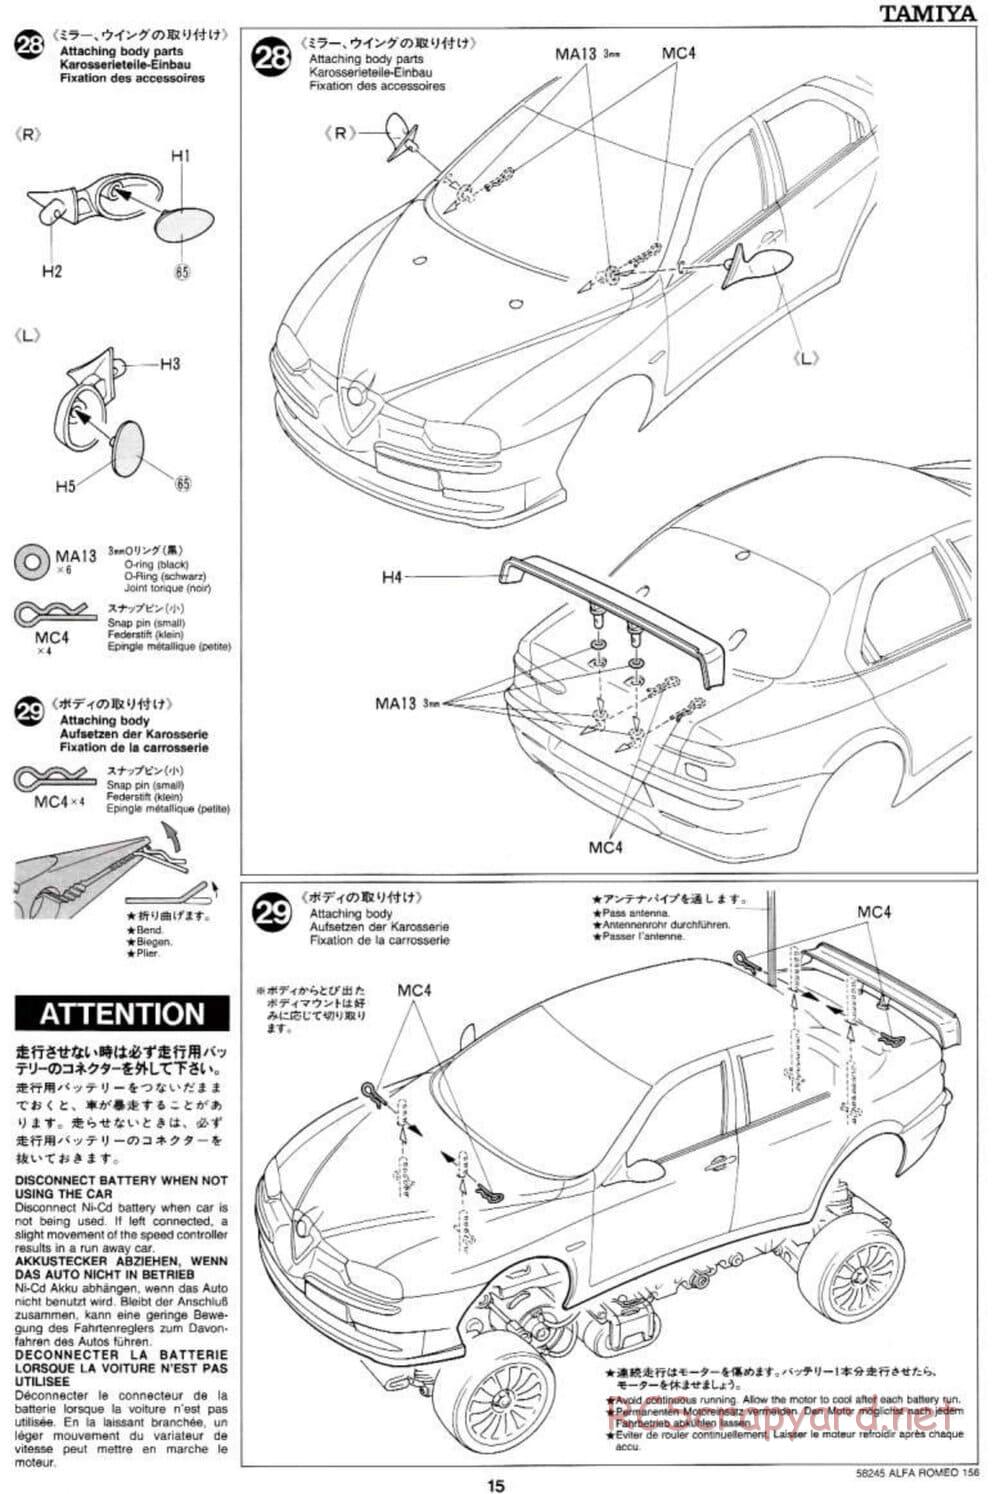 Tamiya - Alfa Romeo 156 Racing - FF-02 Chassis - Manual - Page 15